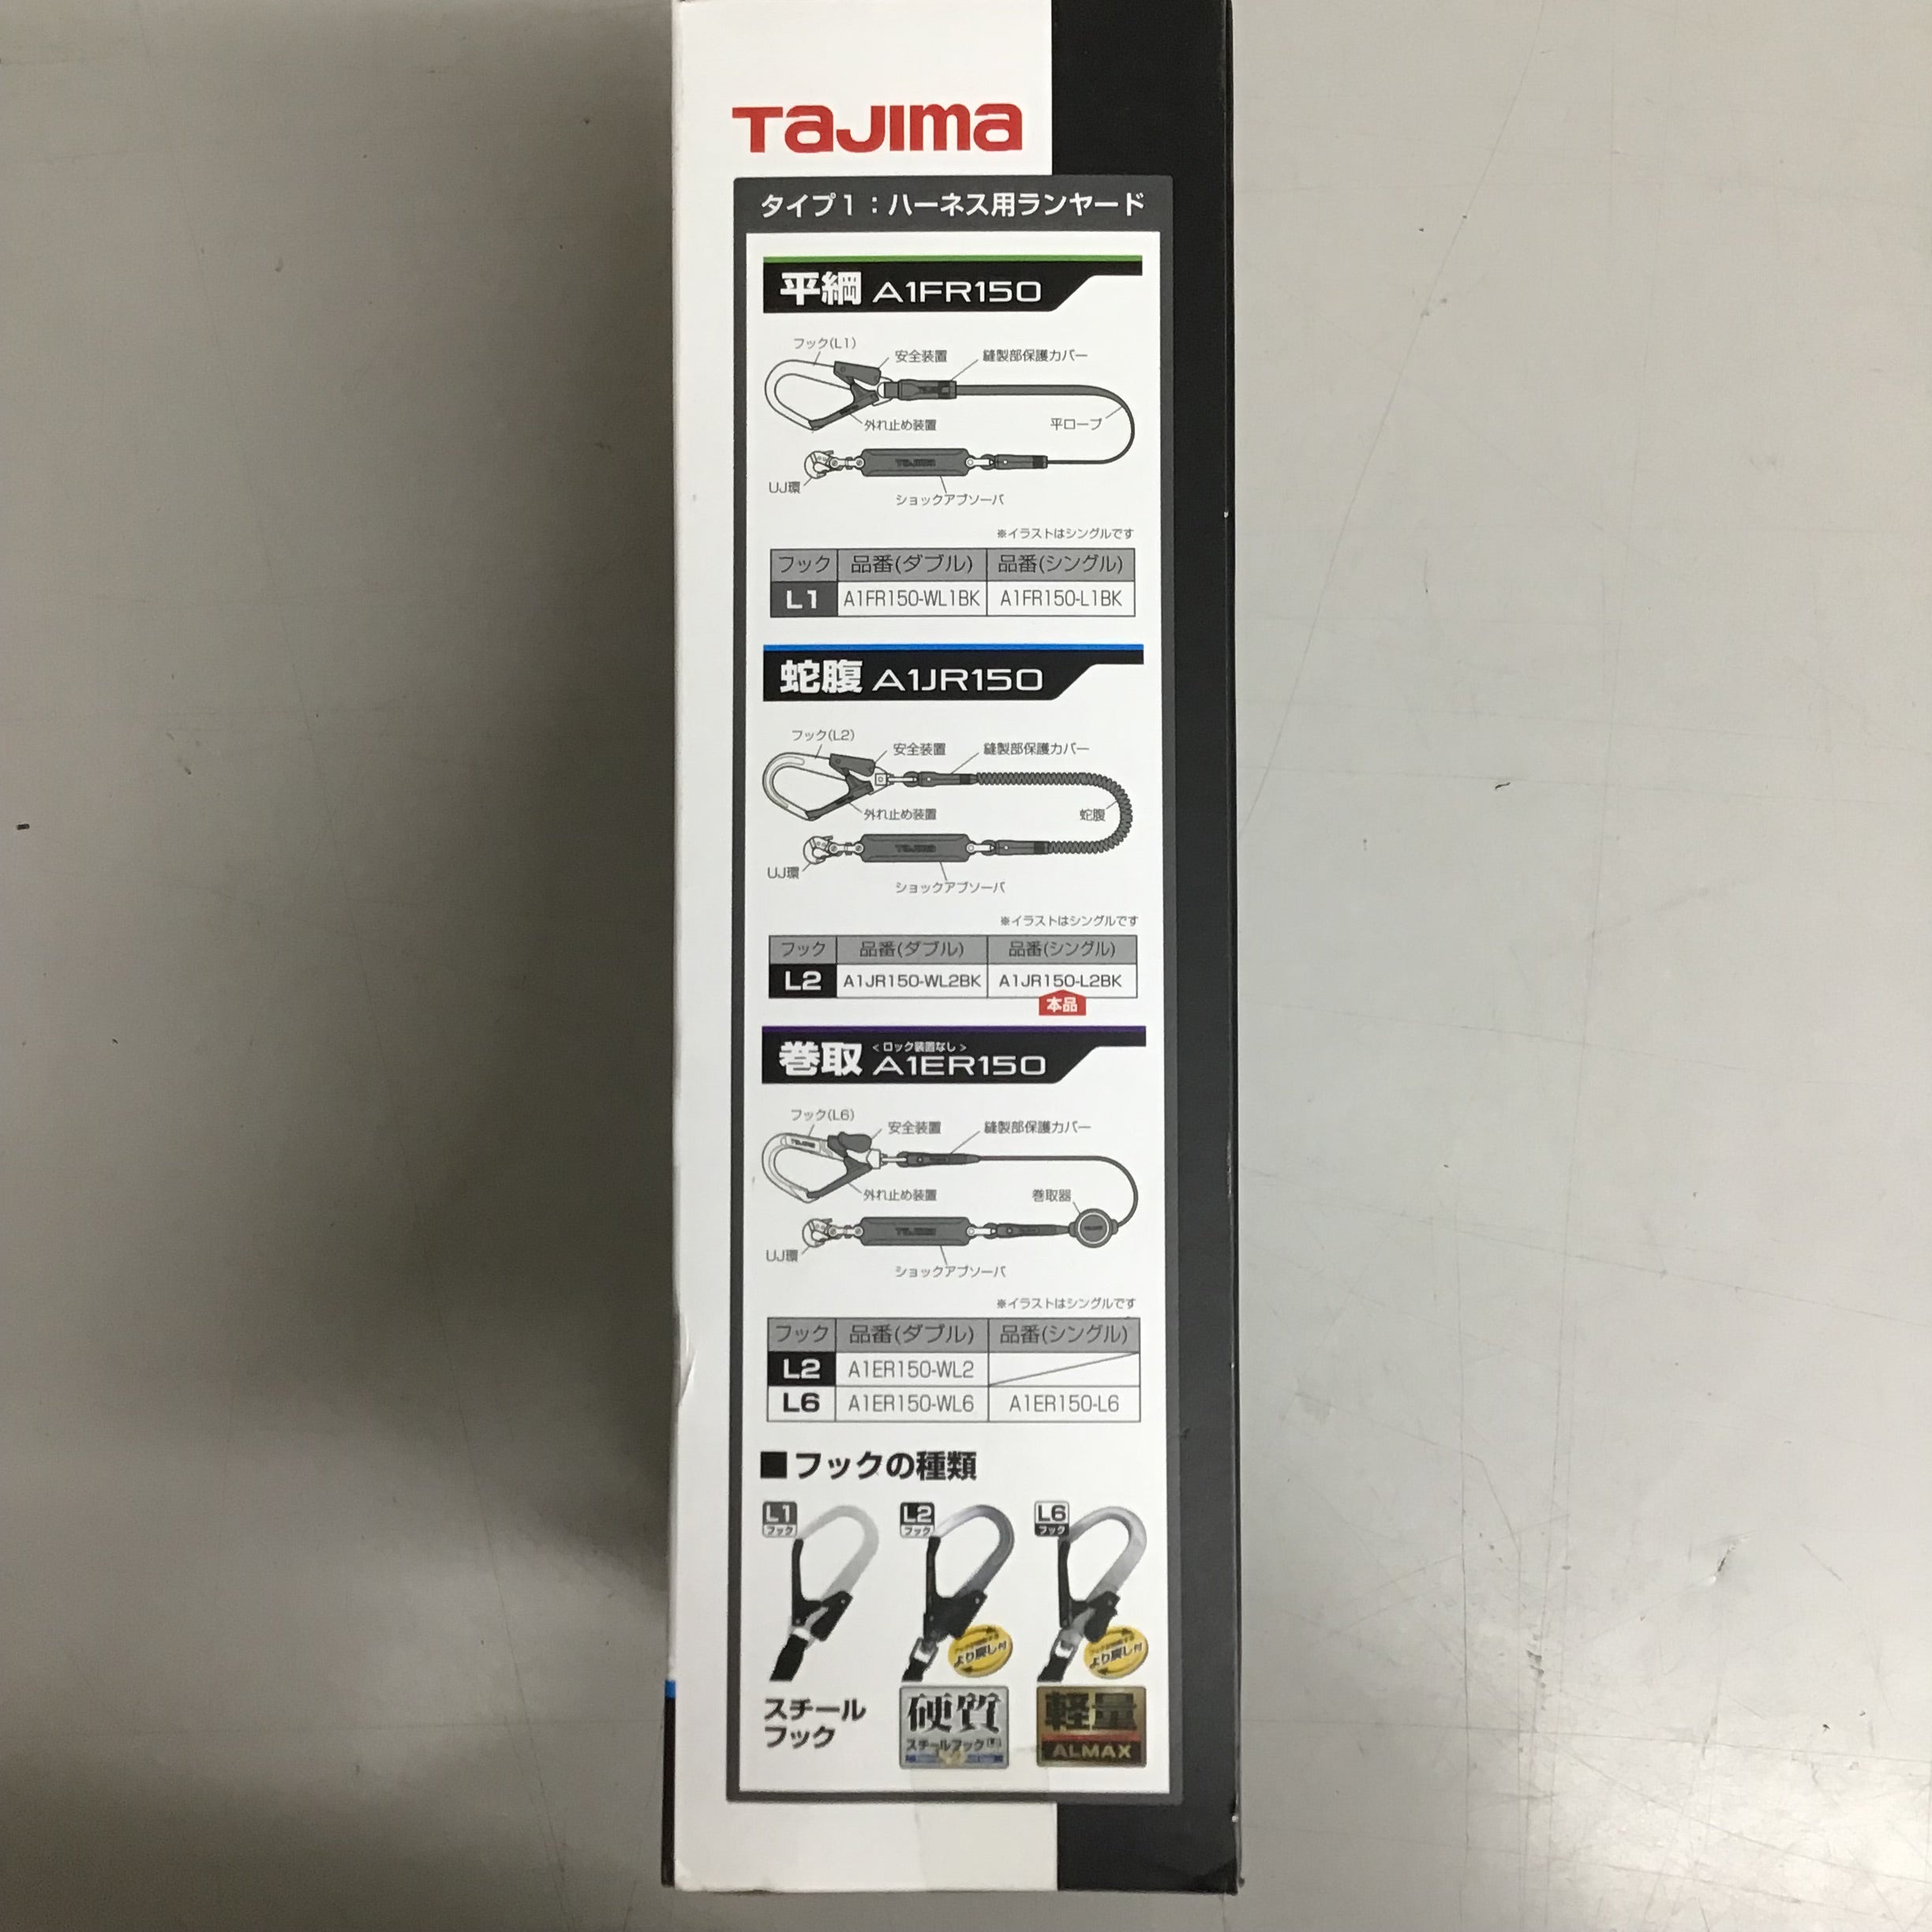 Tajima 安全帯 ハーネス用ランヤード 蛇腹 L2A1JR150-L2BK 新規格